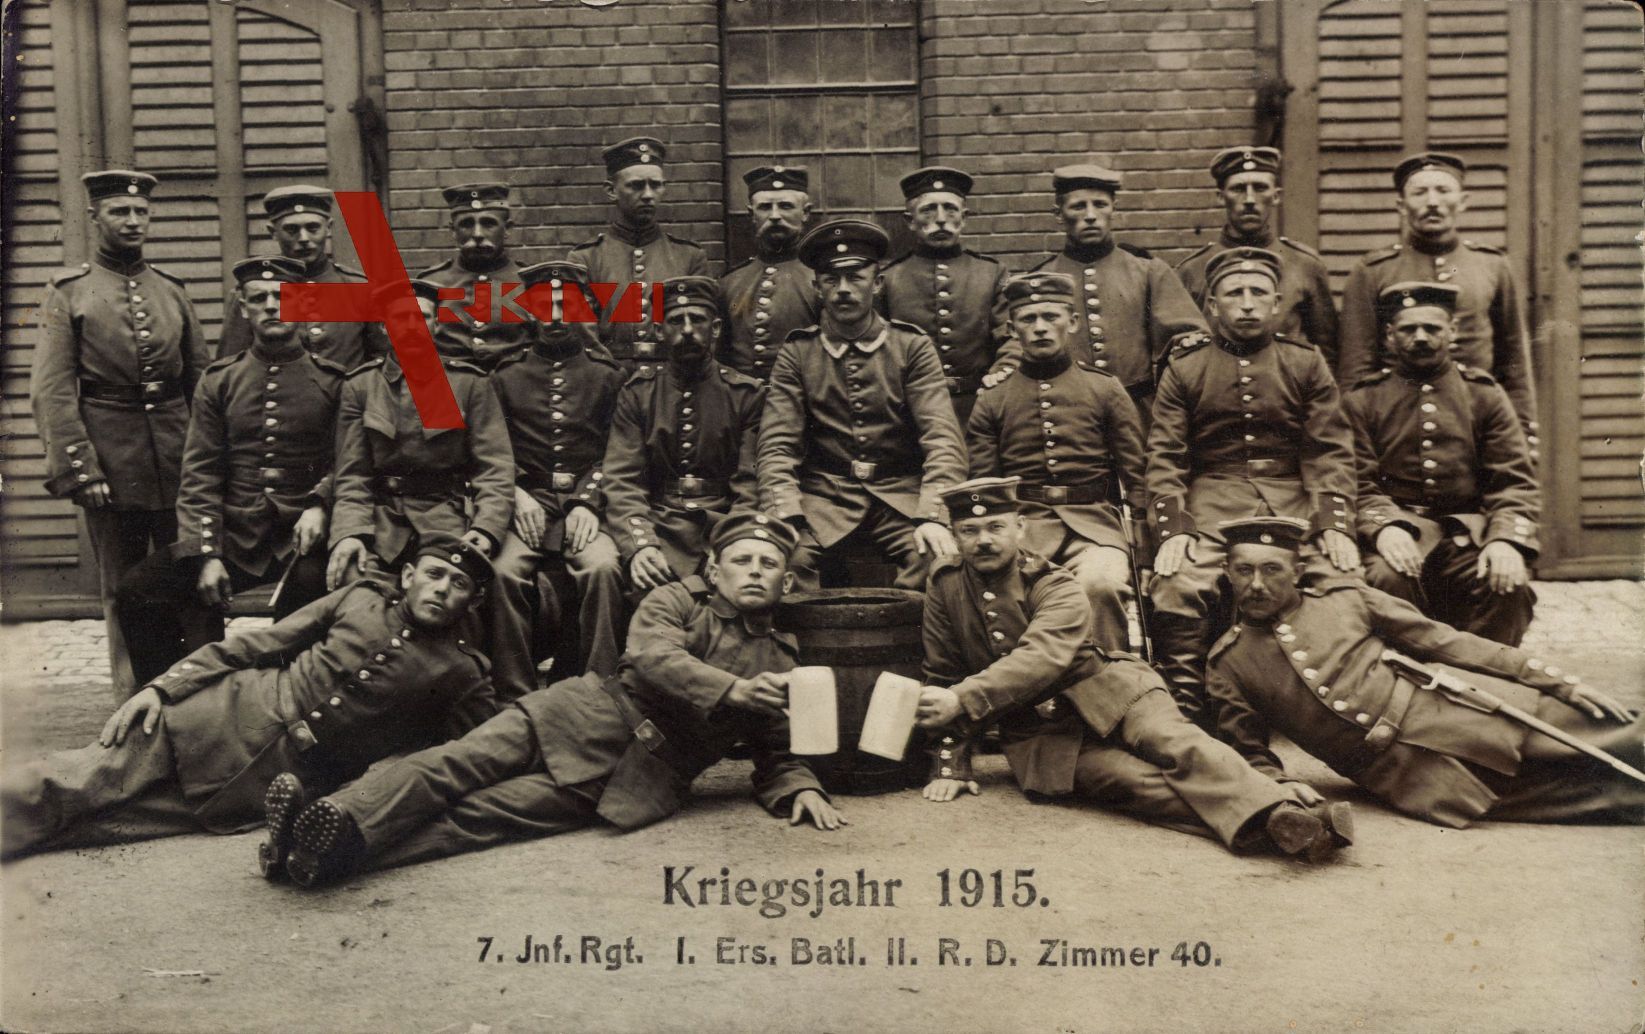 Regiment Kriegsjahr 1915, 8 Inf. Rgt. I. Ers. Batl. II. R.D. Zimmer 40